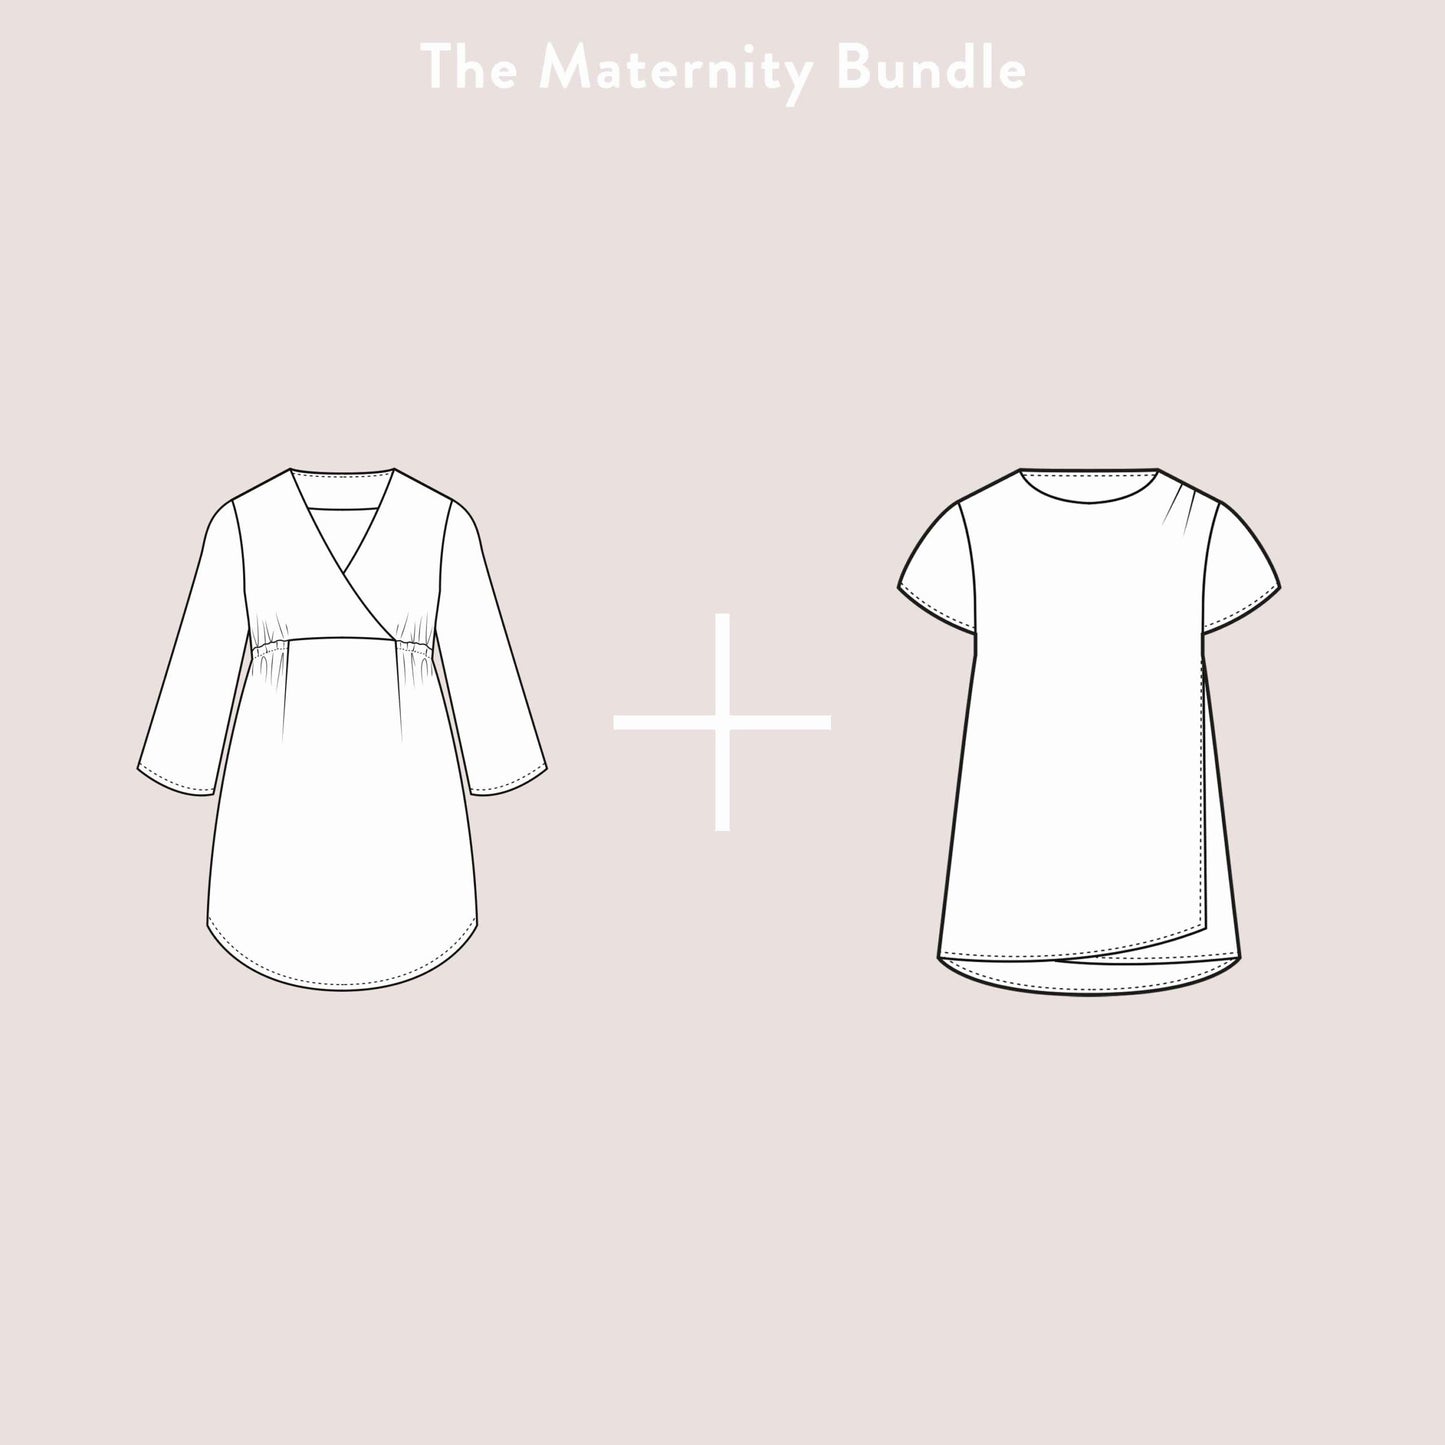 The Maternity Bundle